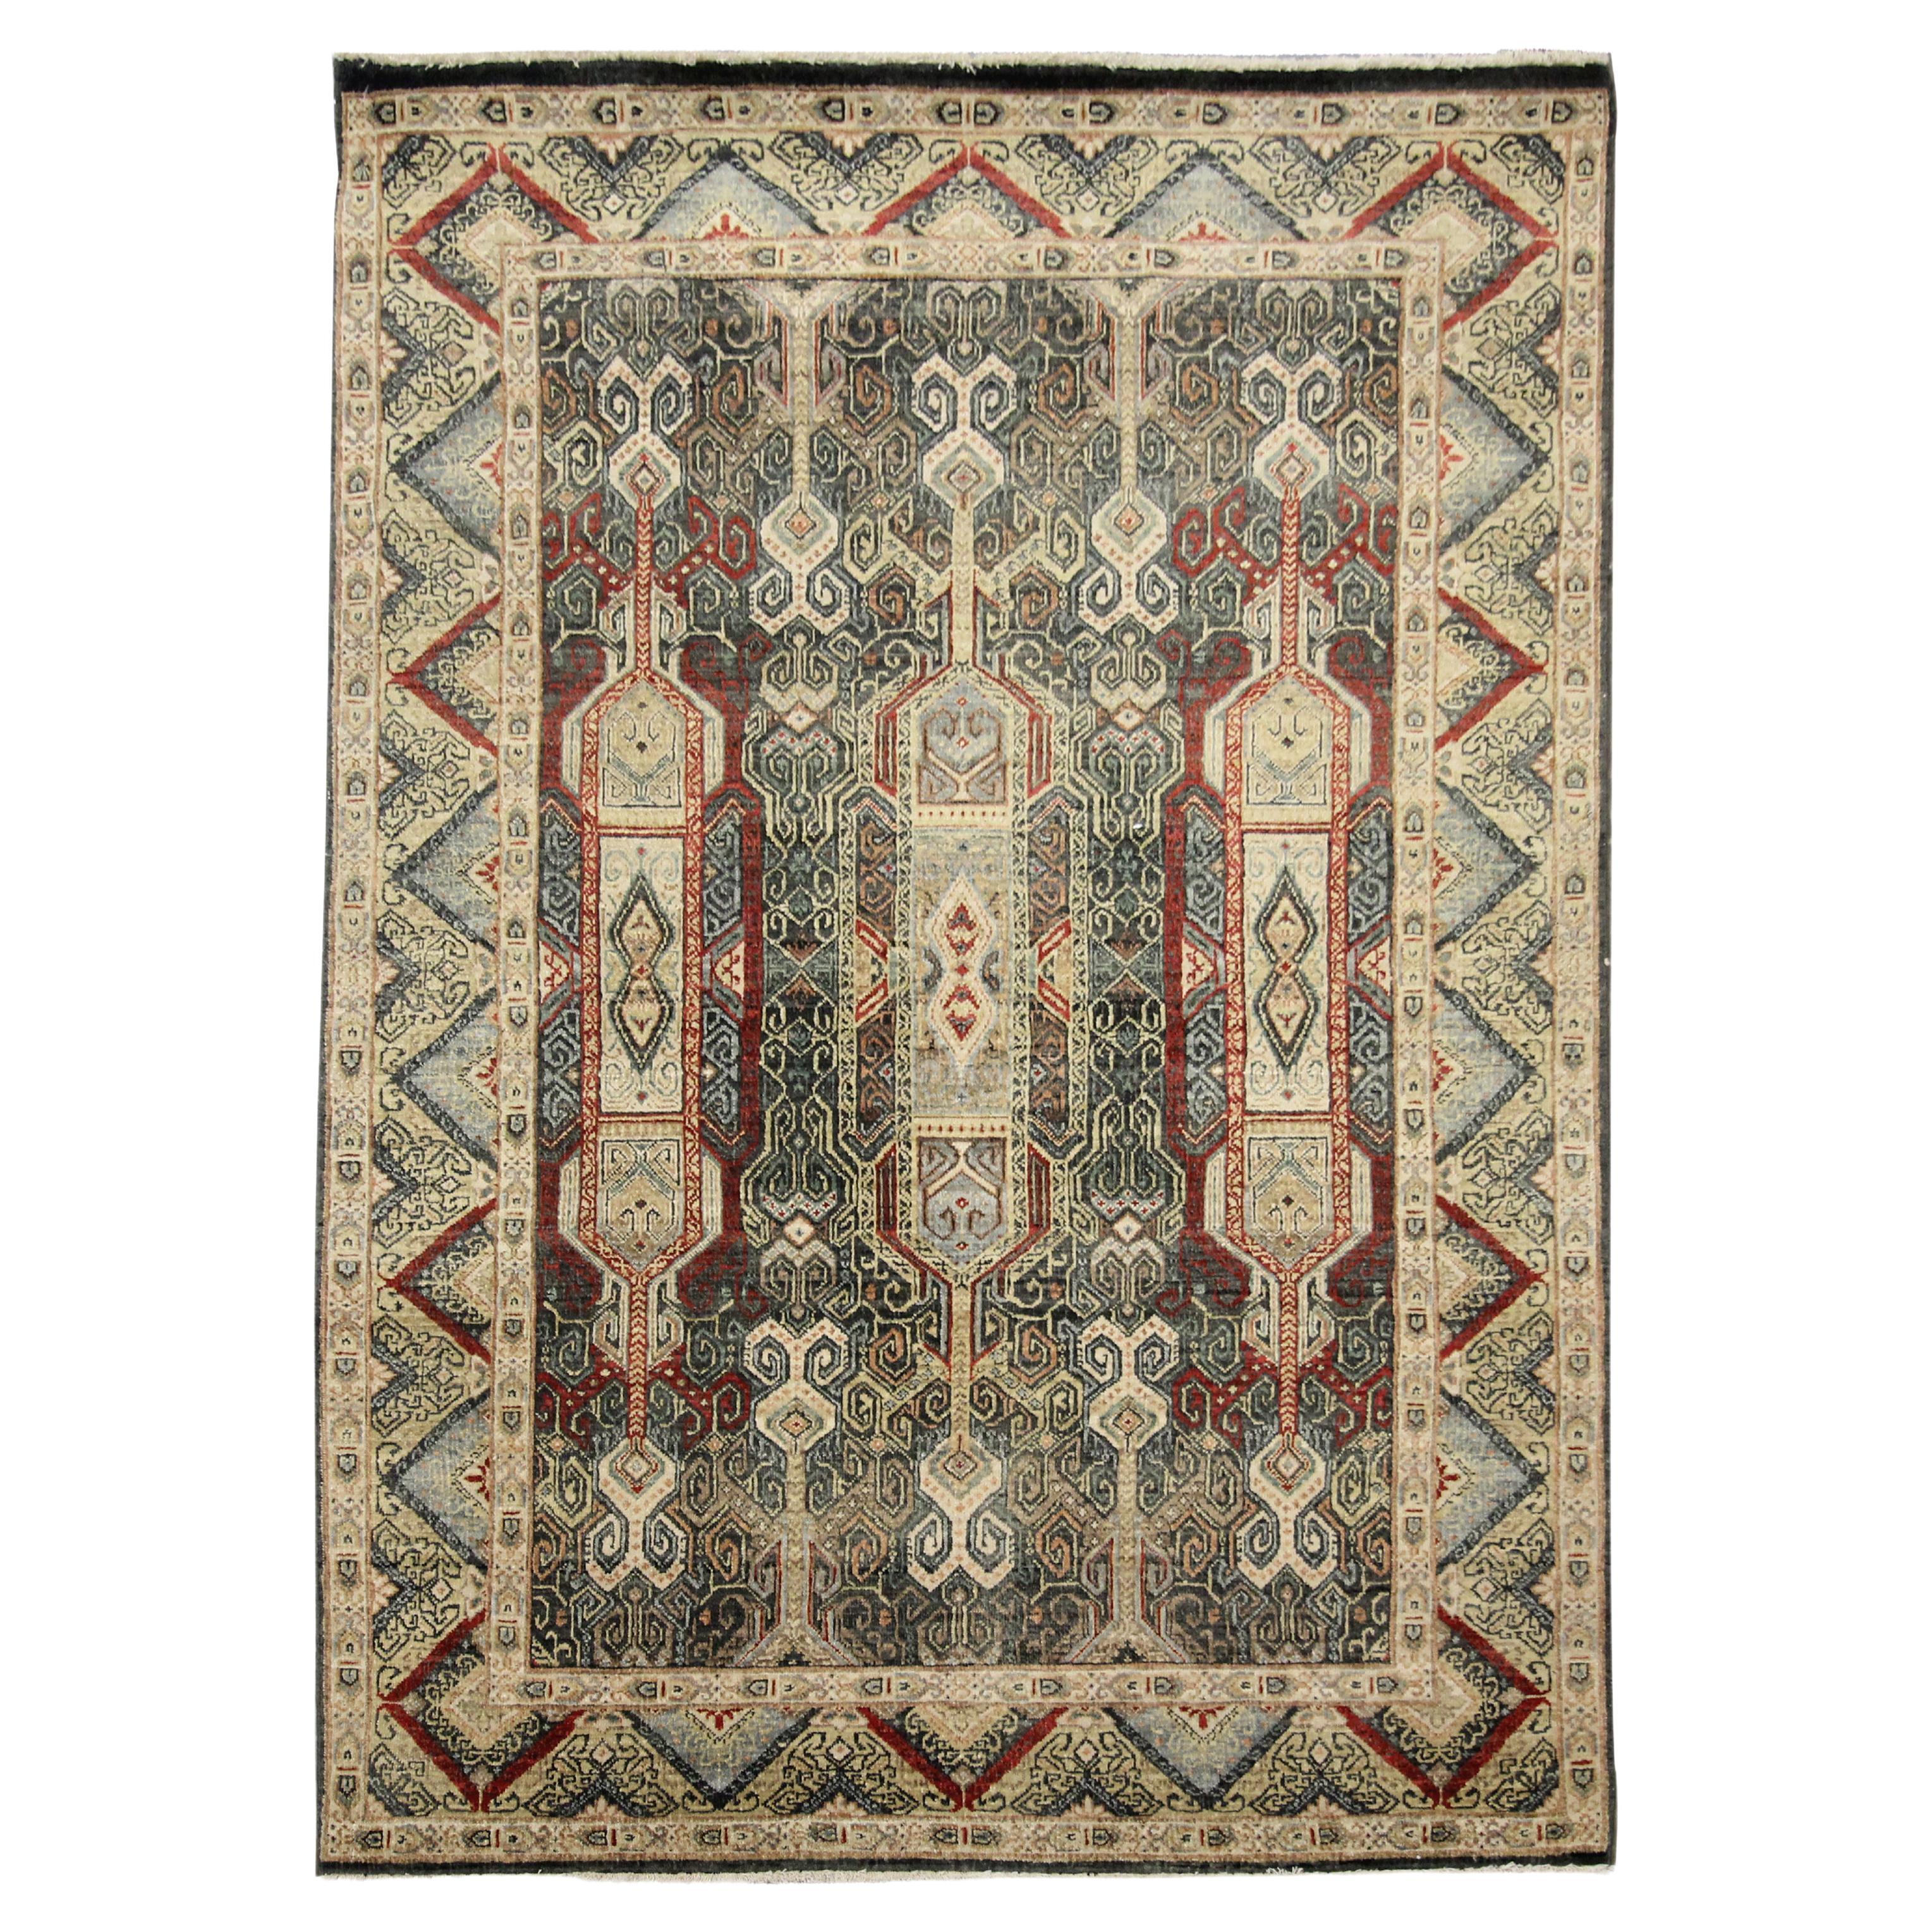 Handmade Carpet Traditional Indian Wool Area Rug Beige Green Geometric For Sale